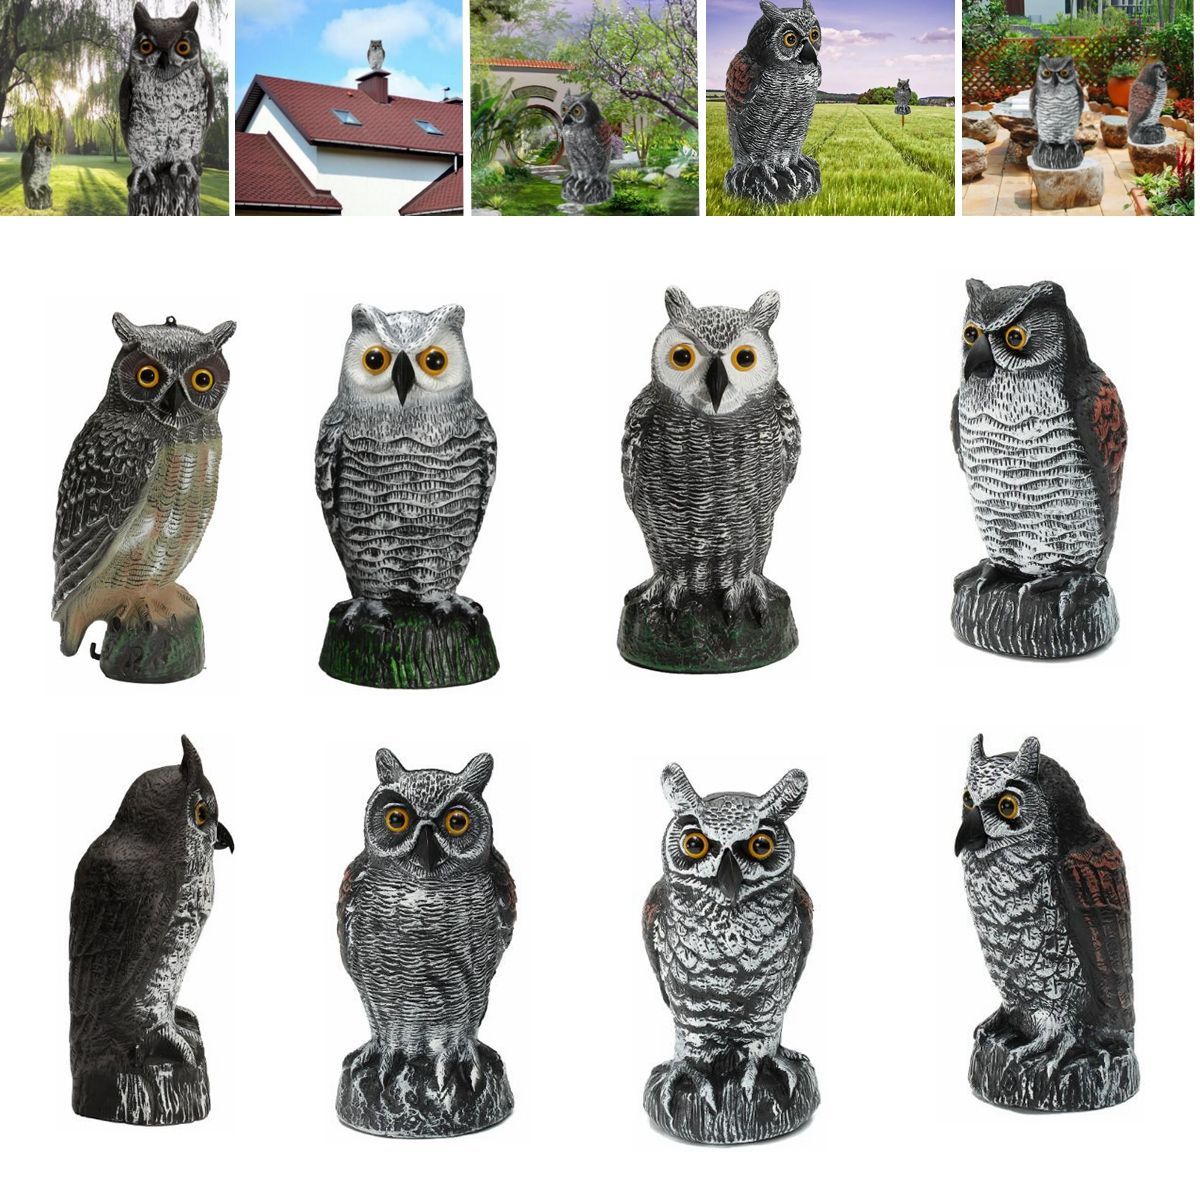 Fake-Standing-Owl-Bird-Model-Toys-Hunting-Shooting-Decoy-Deterrent-Home-Garden-Decorations-1369871